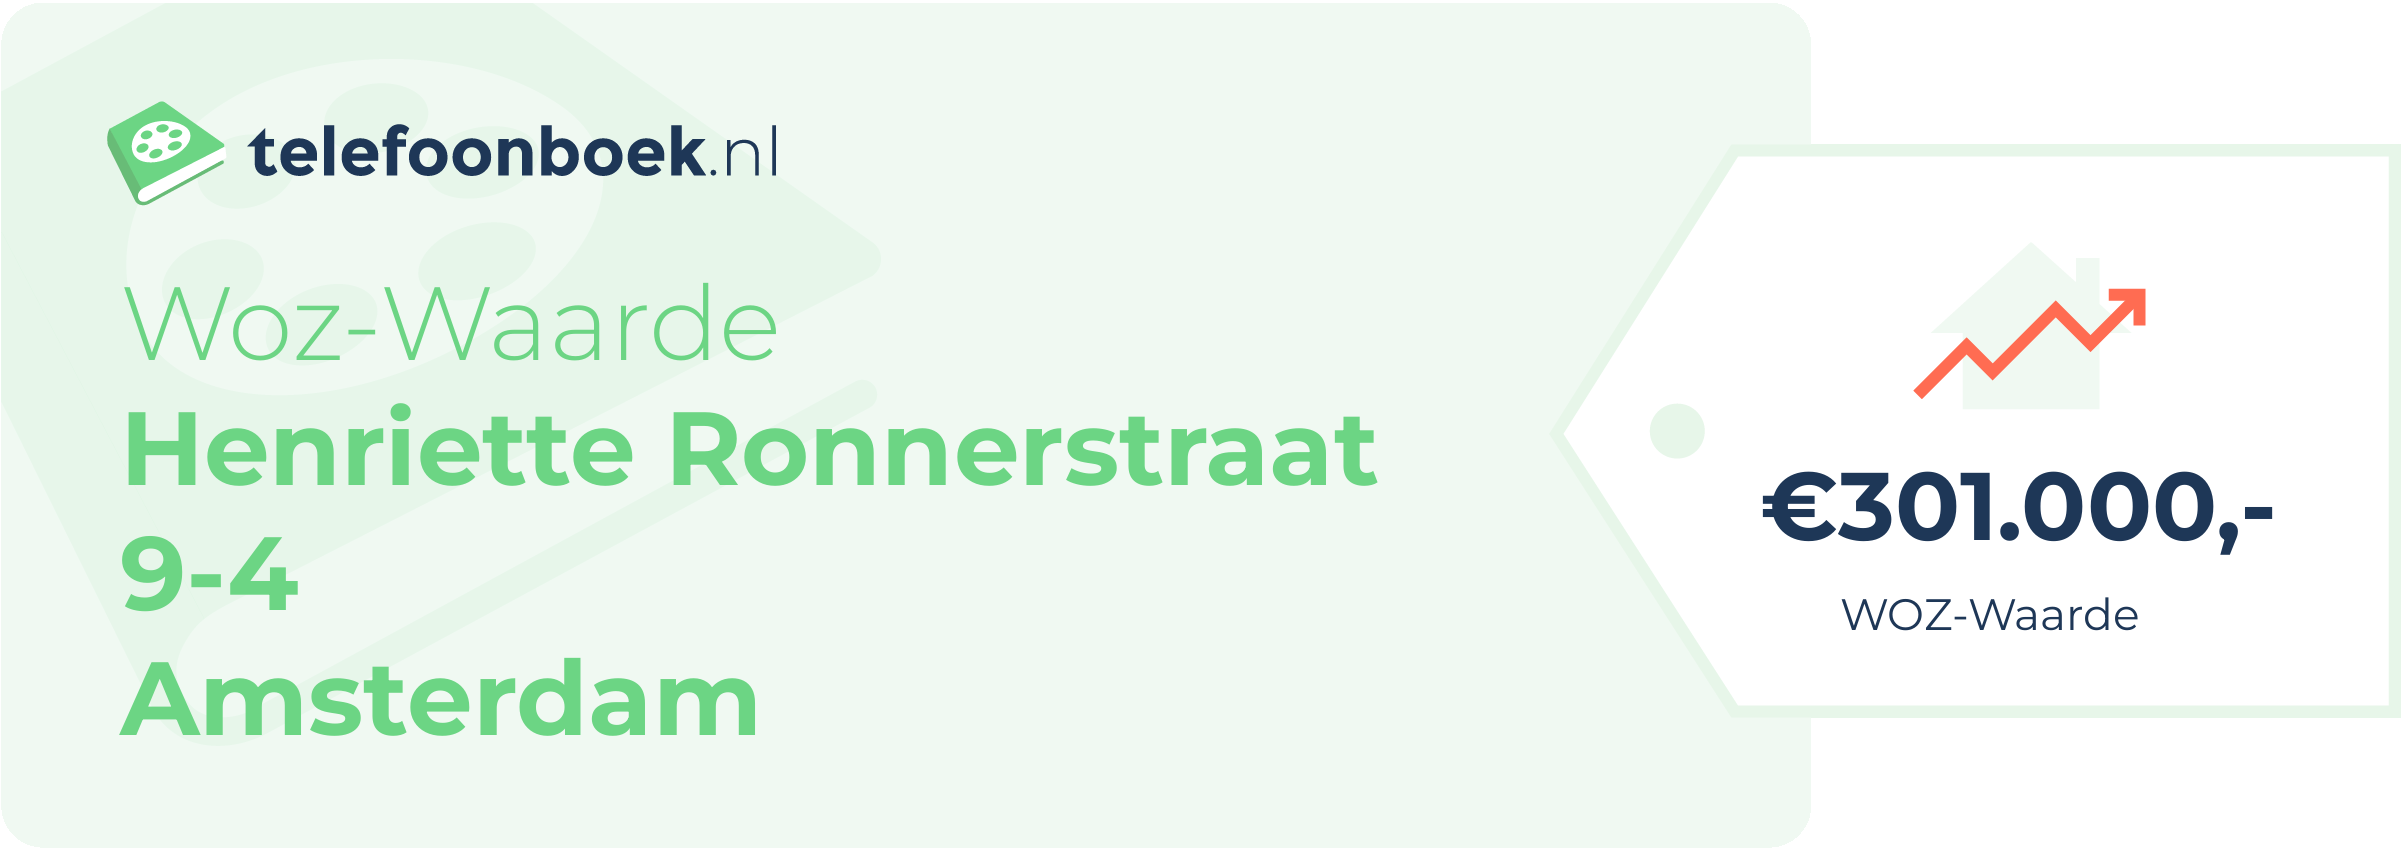 WOZ-waarde Henriette Ronnerstraat 9-4 Amsterdam